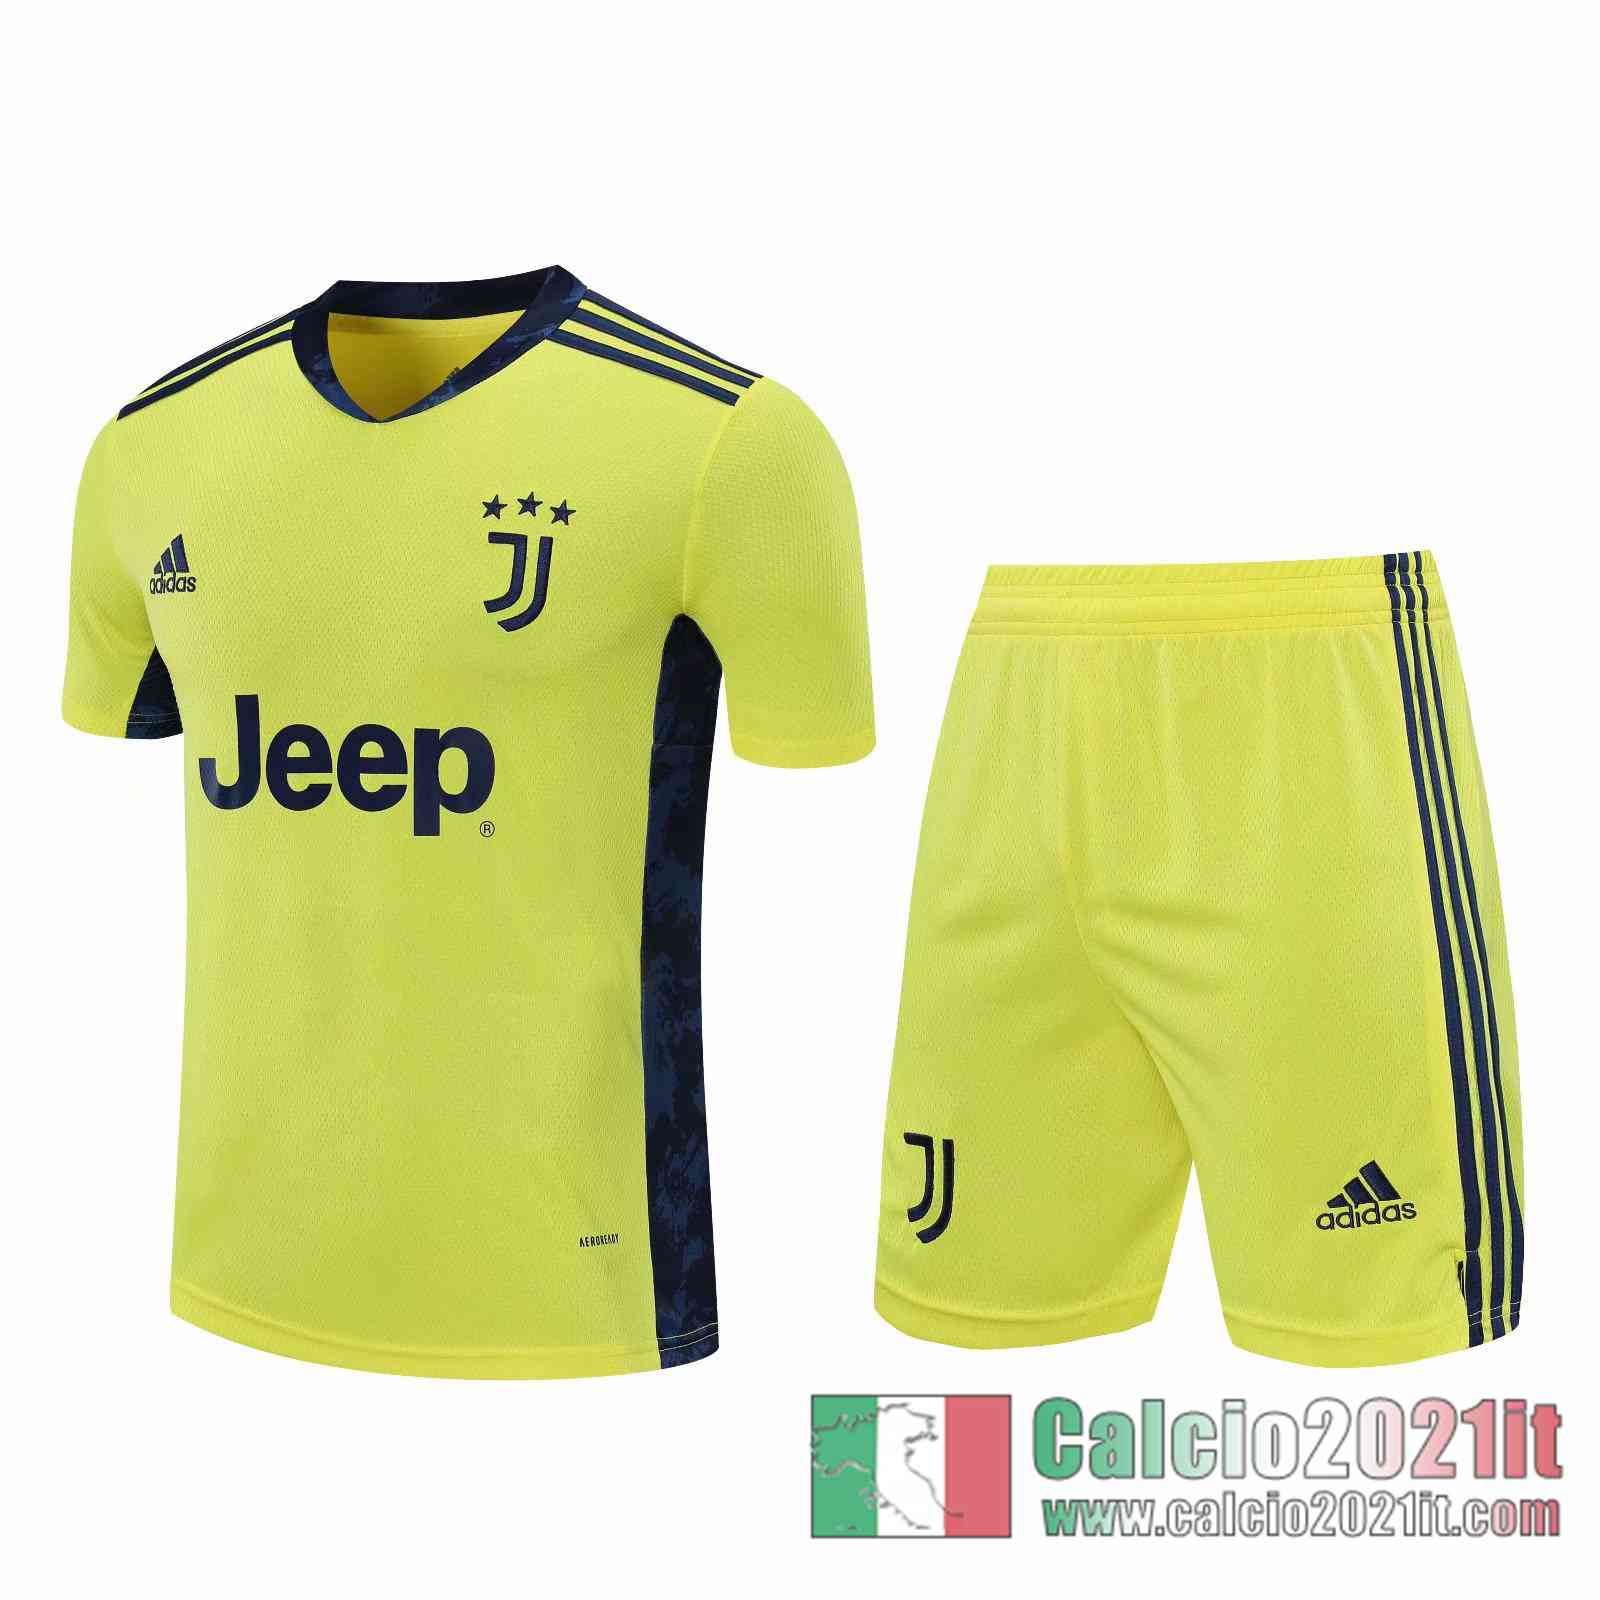 Juventus Maglie Calcio Portiere giallo verde 2020 2021